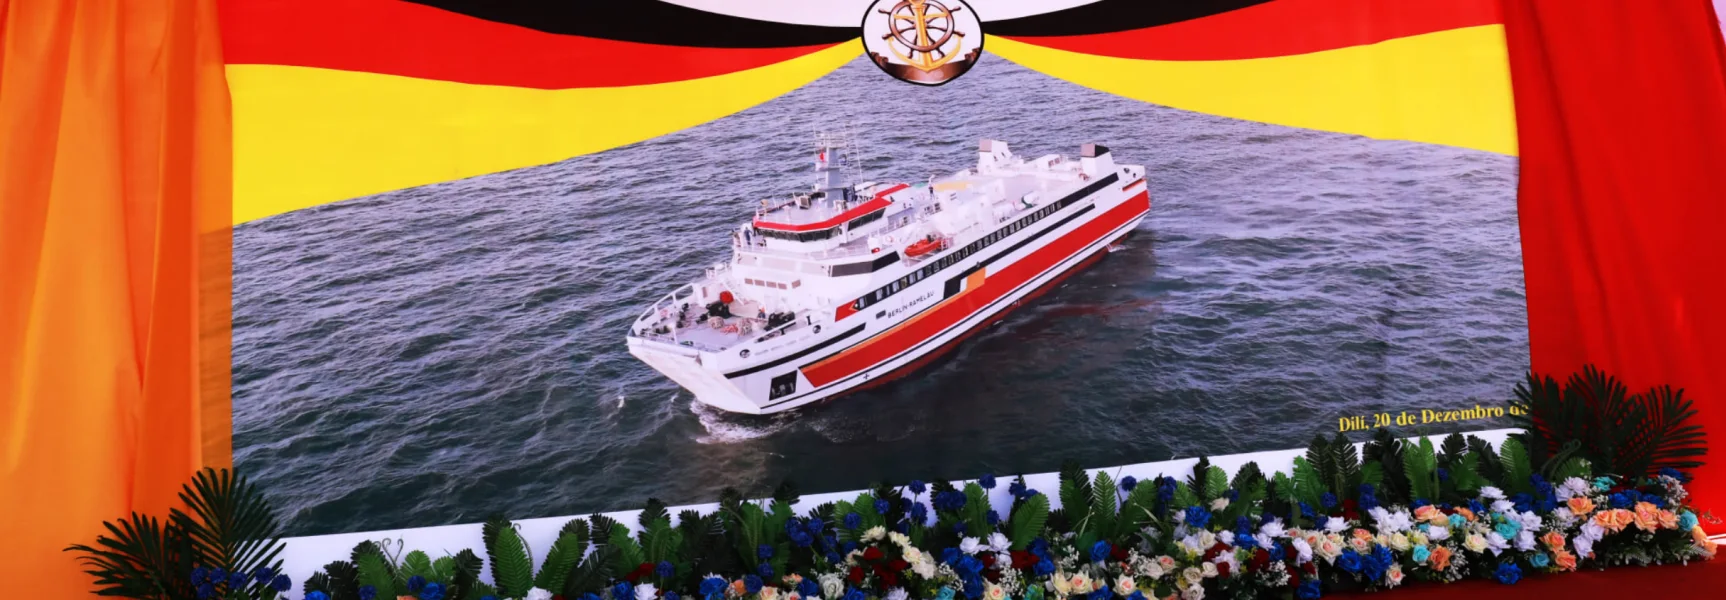 eBlue_economy_Damen Shipyards hands over new RoPax 6716 to Port Authority of Timor-Leste